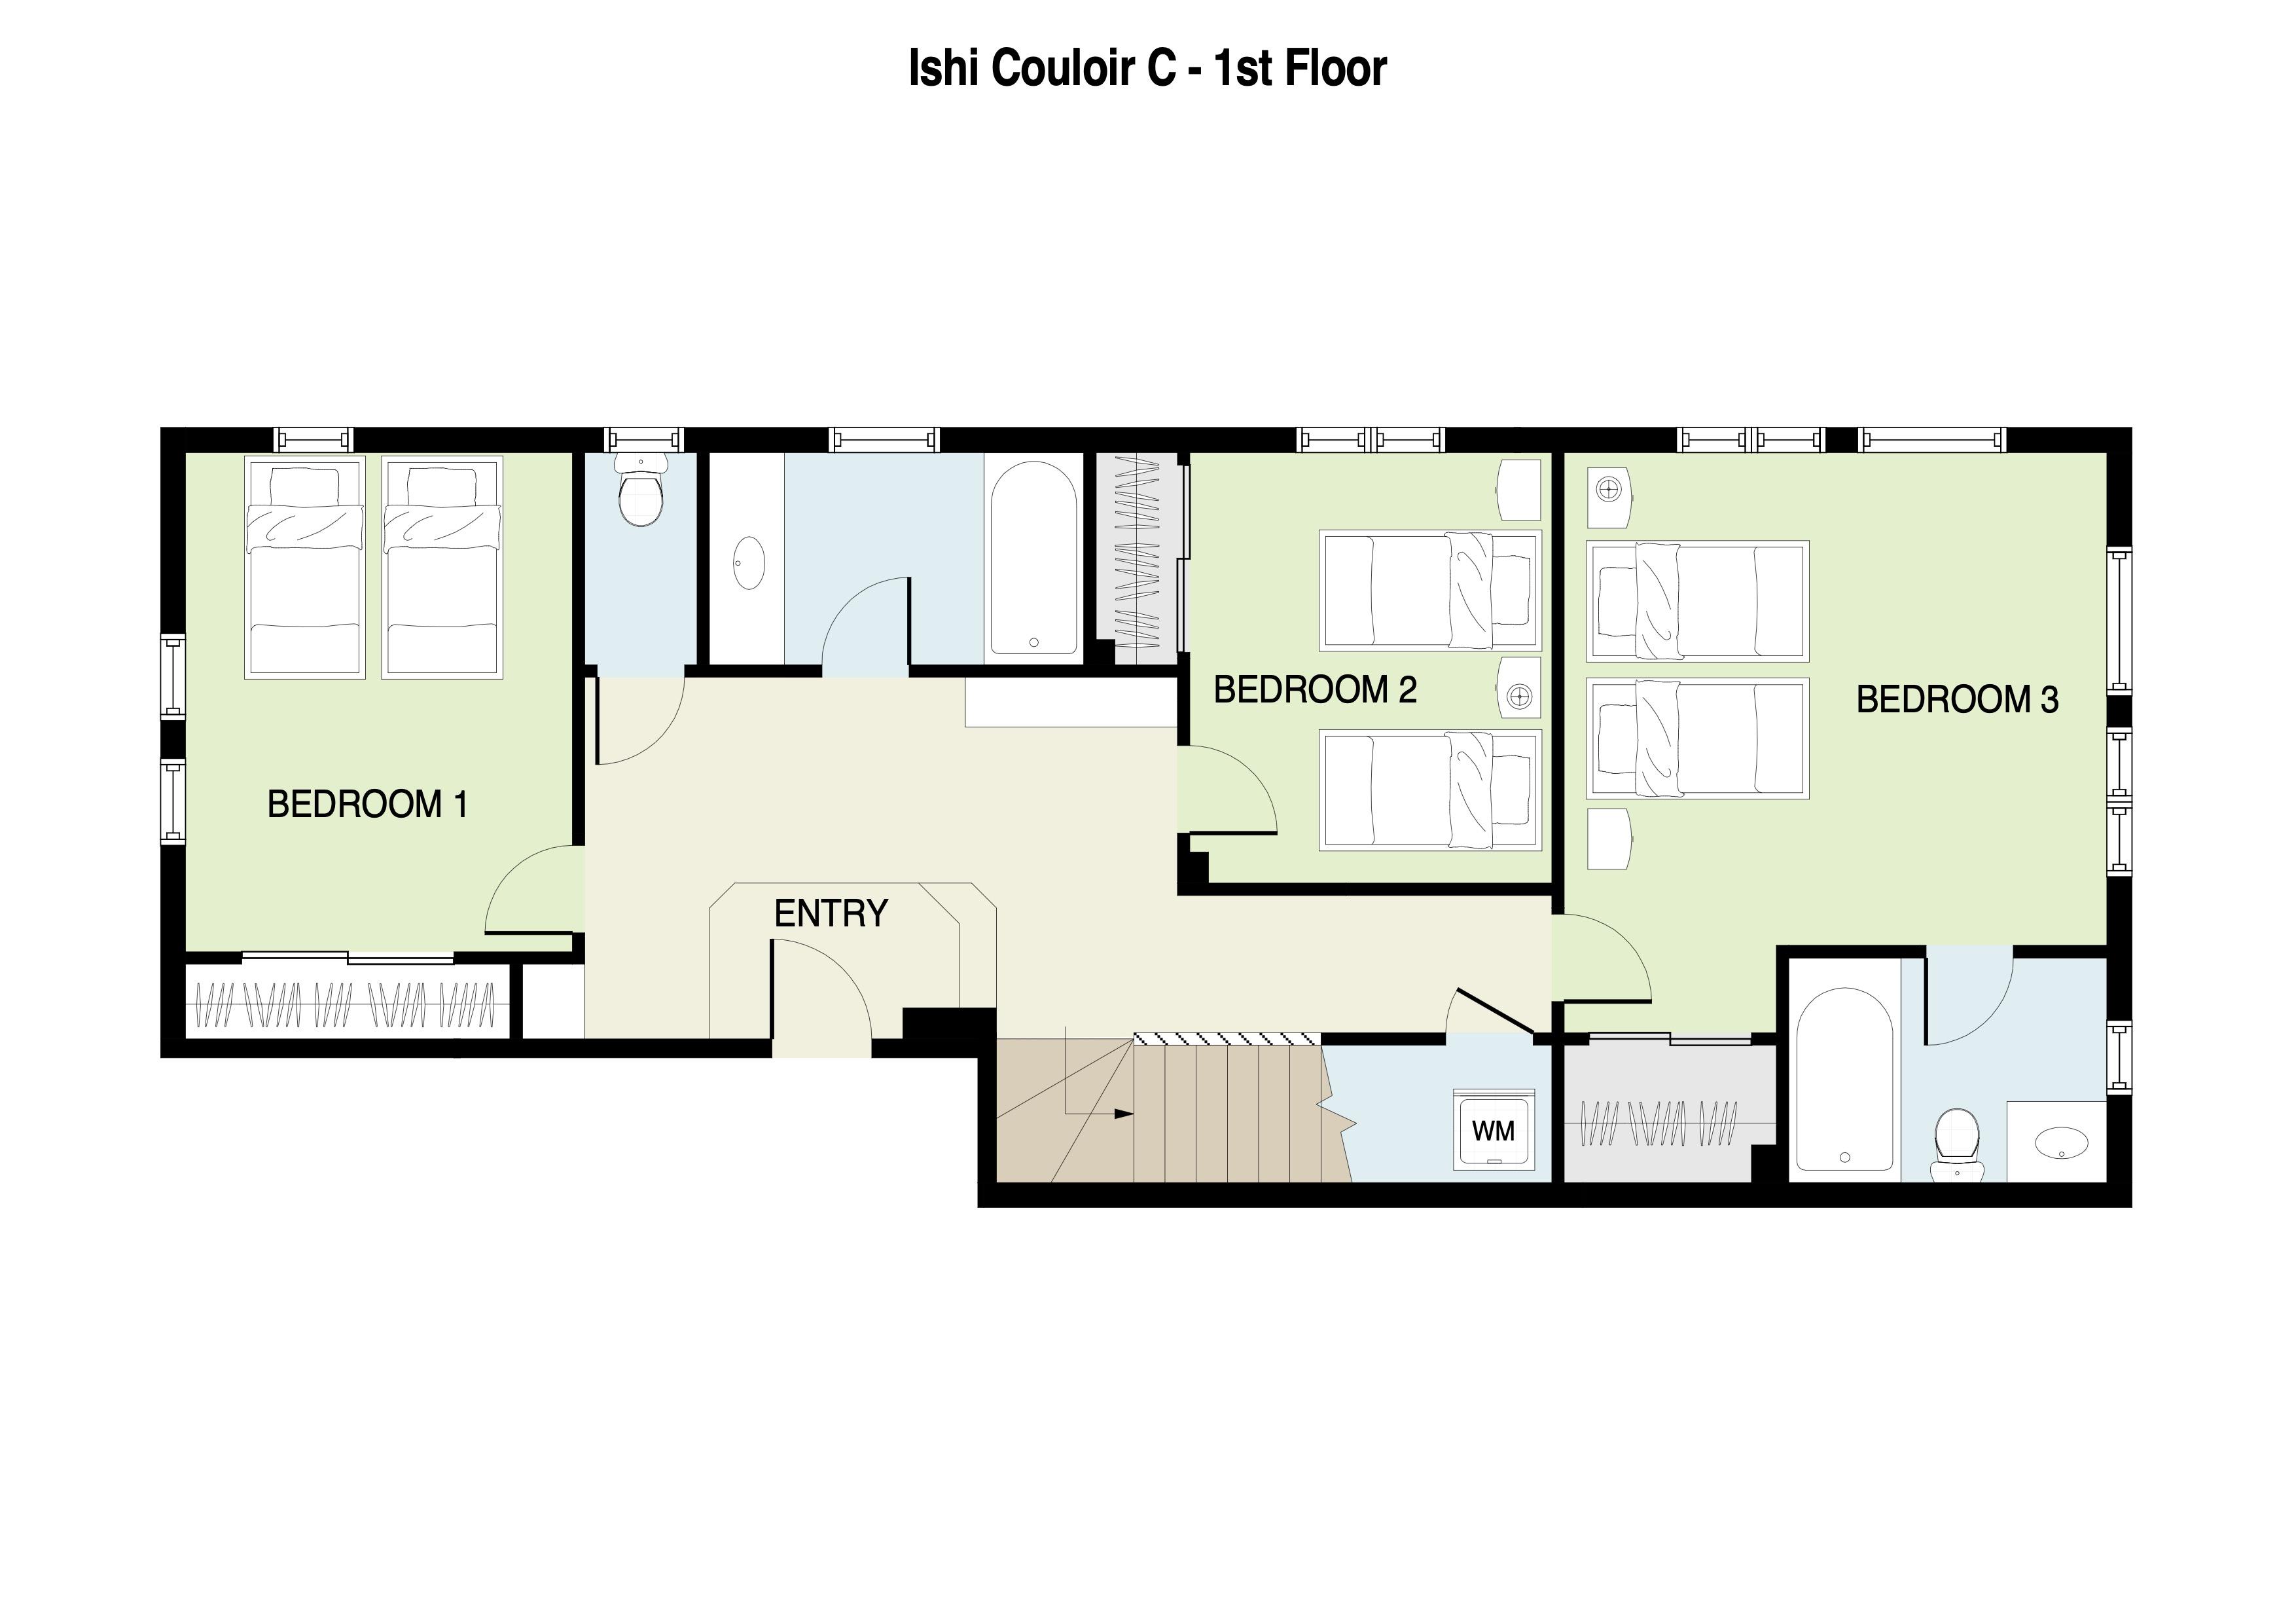 Ishi Couloir C First Floor Plan